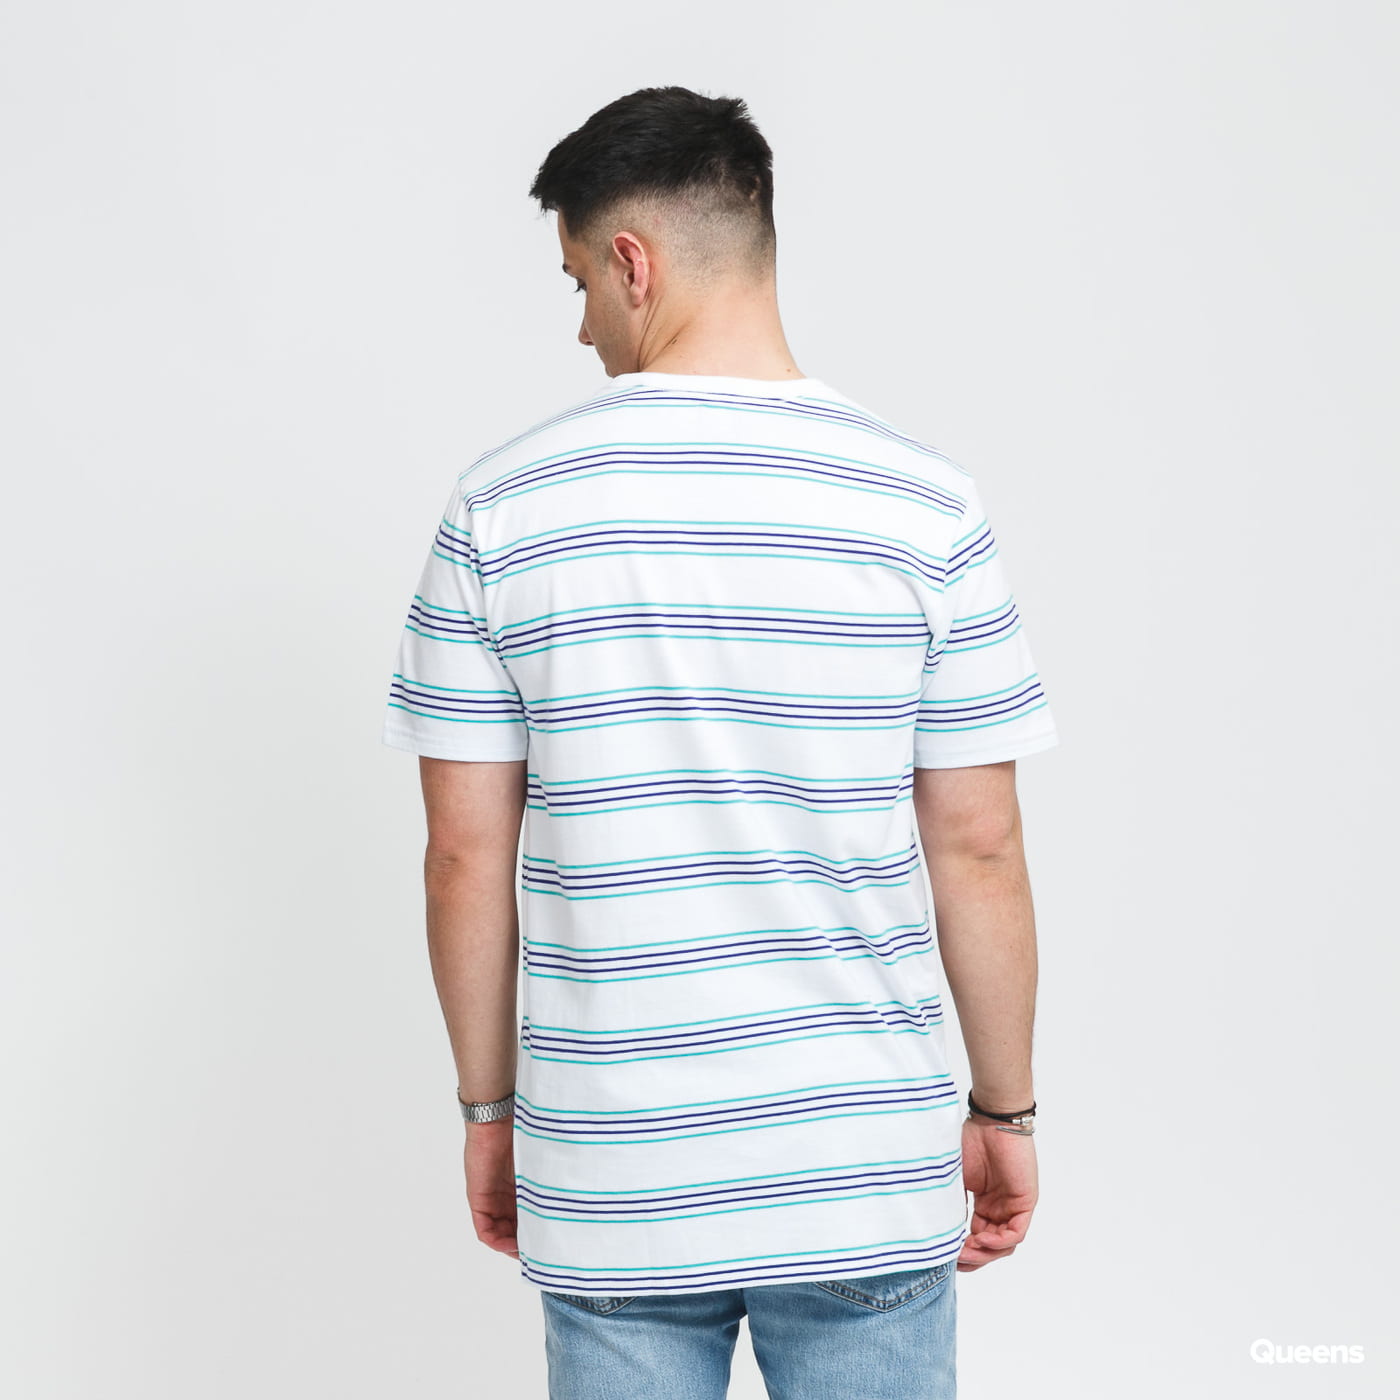 VANS Mens Stripe T-Shirt - White